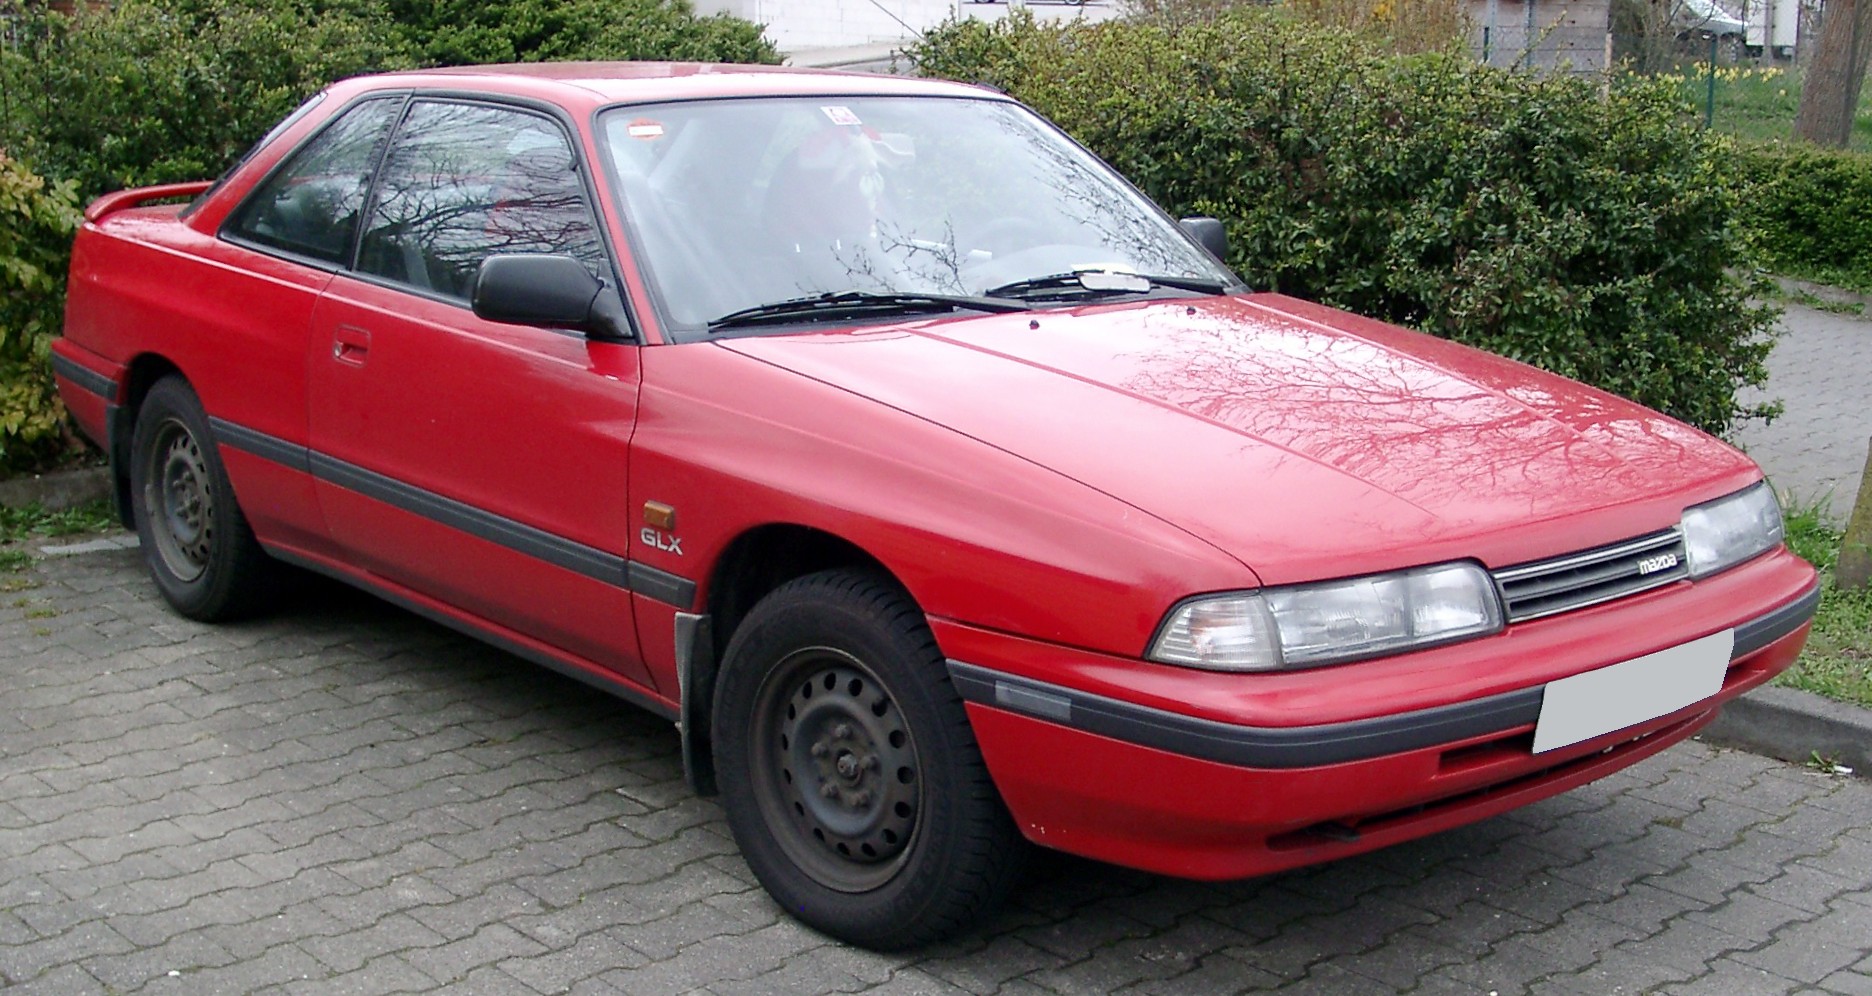 File:Mazda 626 front 20080402.jpg - Wikimedia Commons